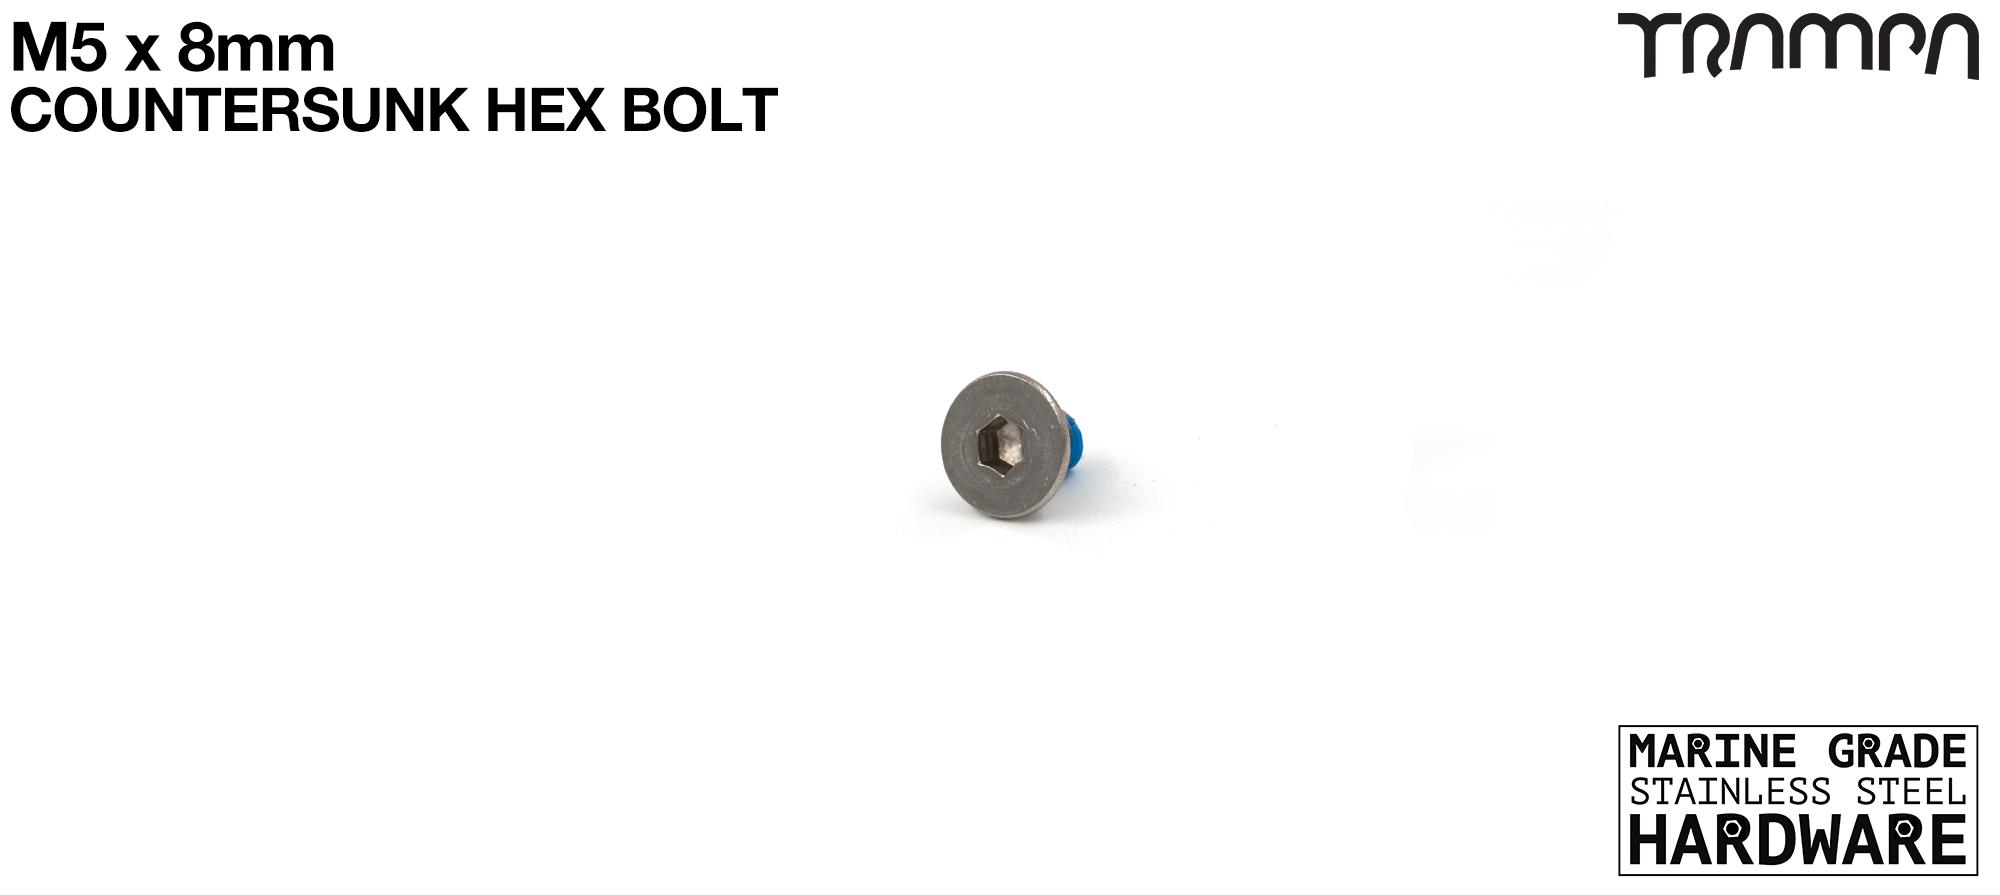 M5 x 8mm Countersunk Allen-Key Bolt - Marine Grade Stainless steel with locking paste